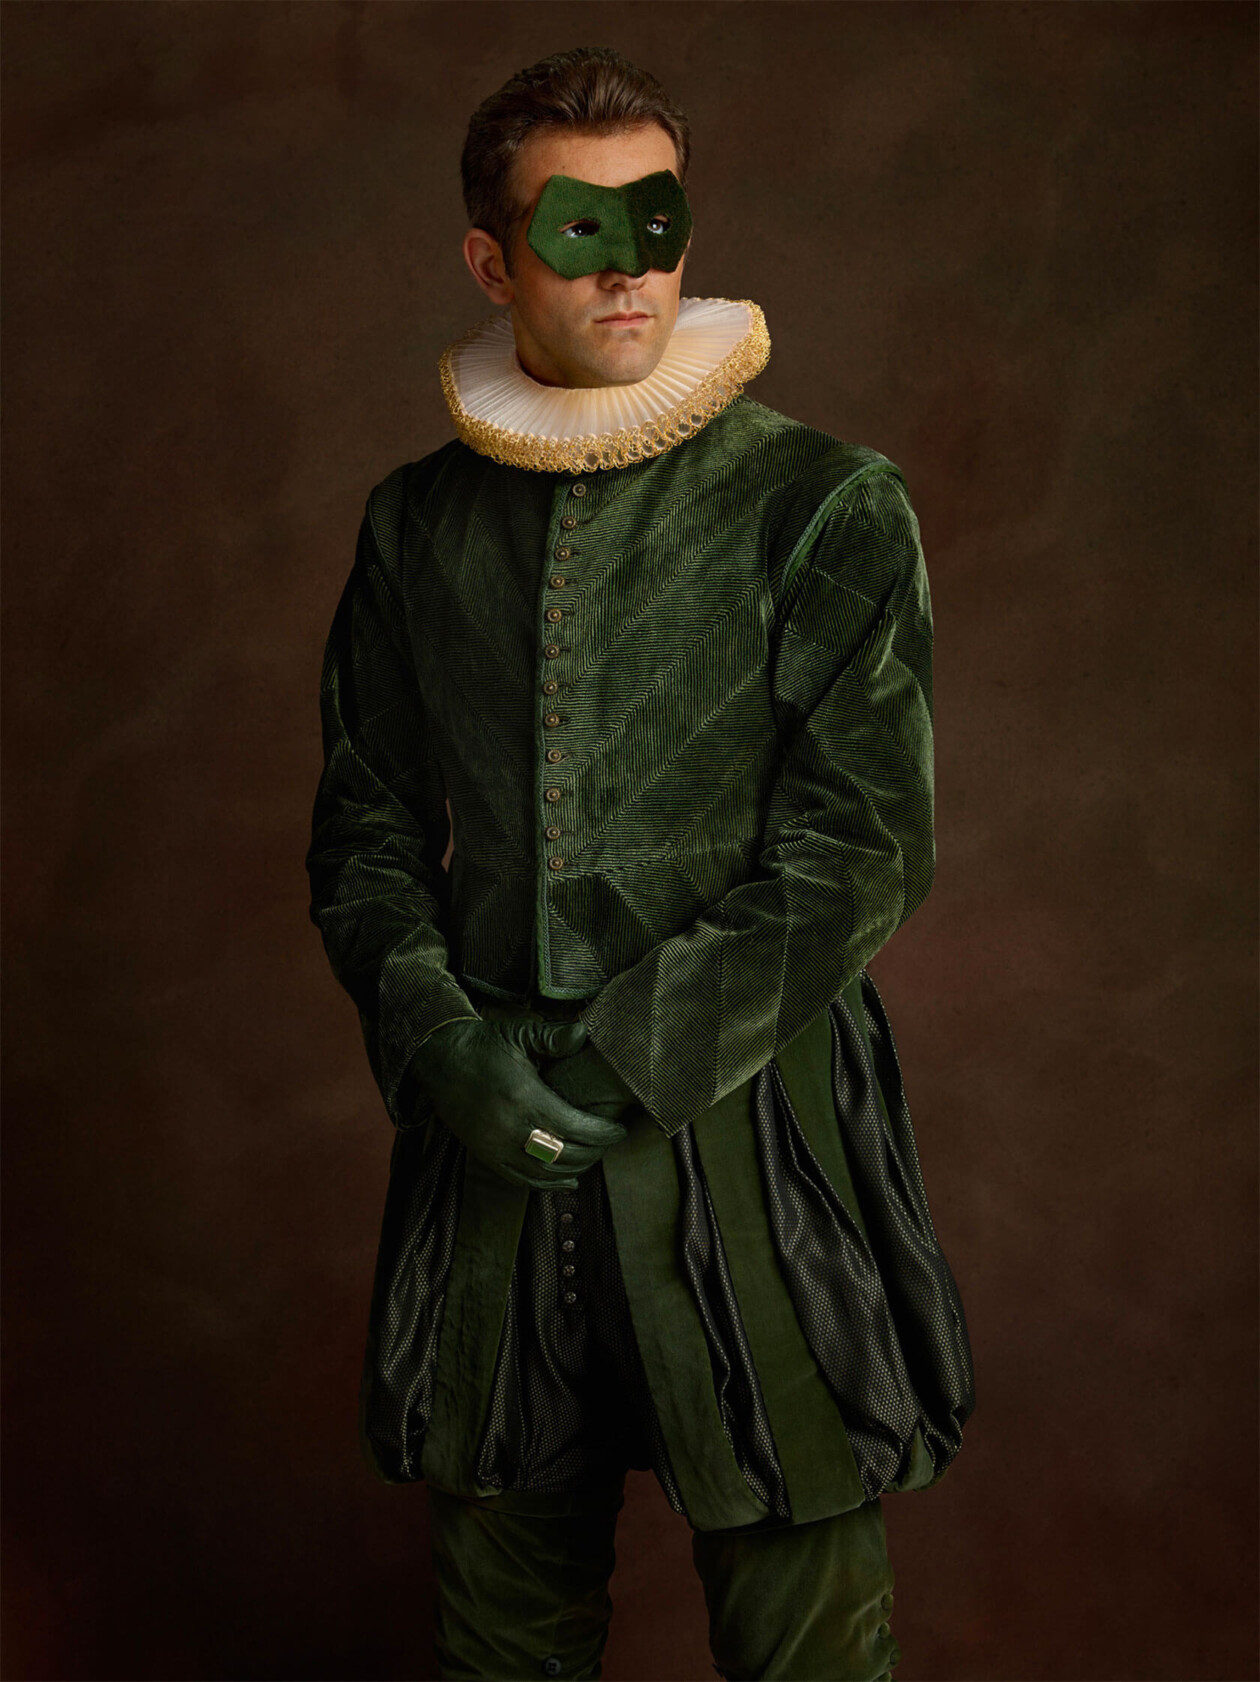 Flemish Superheroes, A Creative Portrait Series By Sacha Goldberger (16)